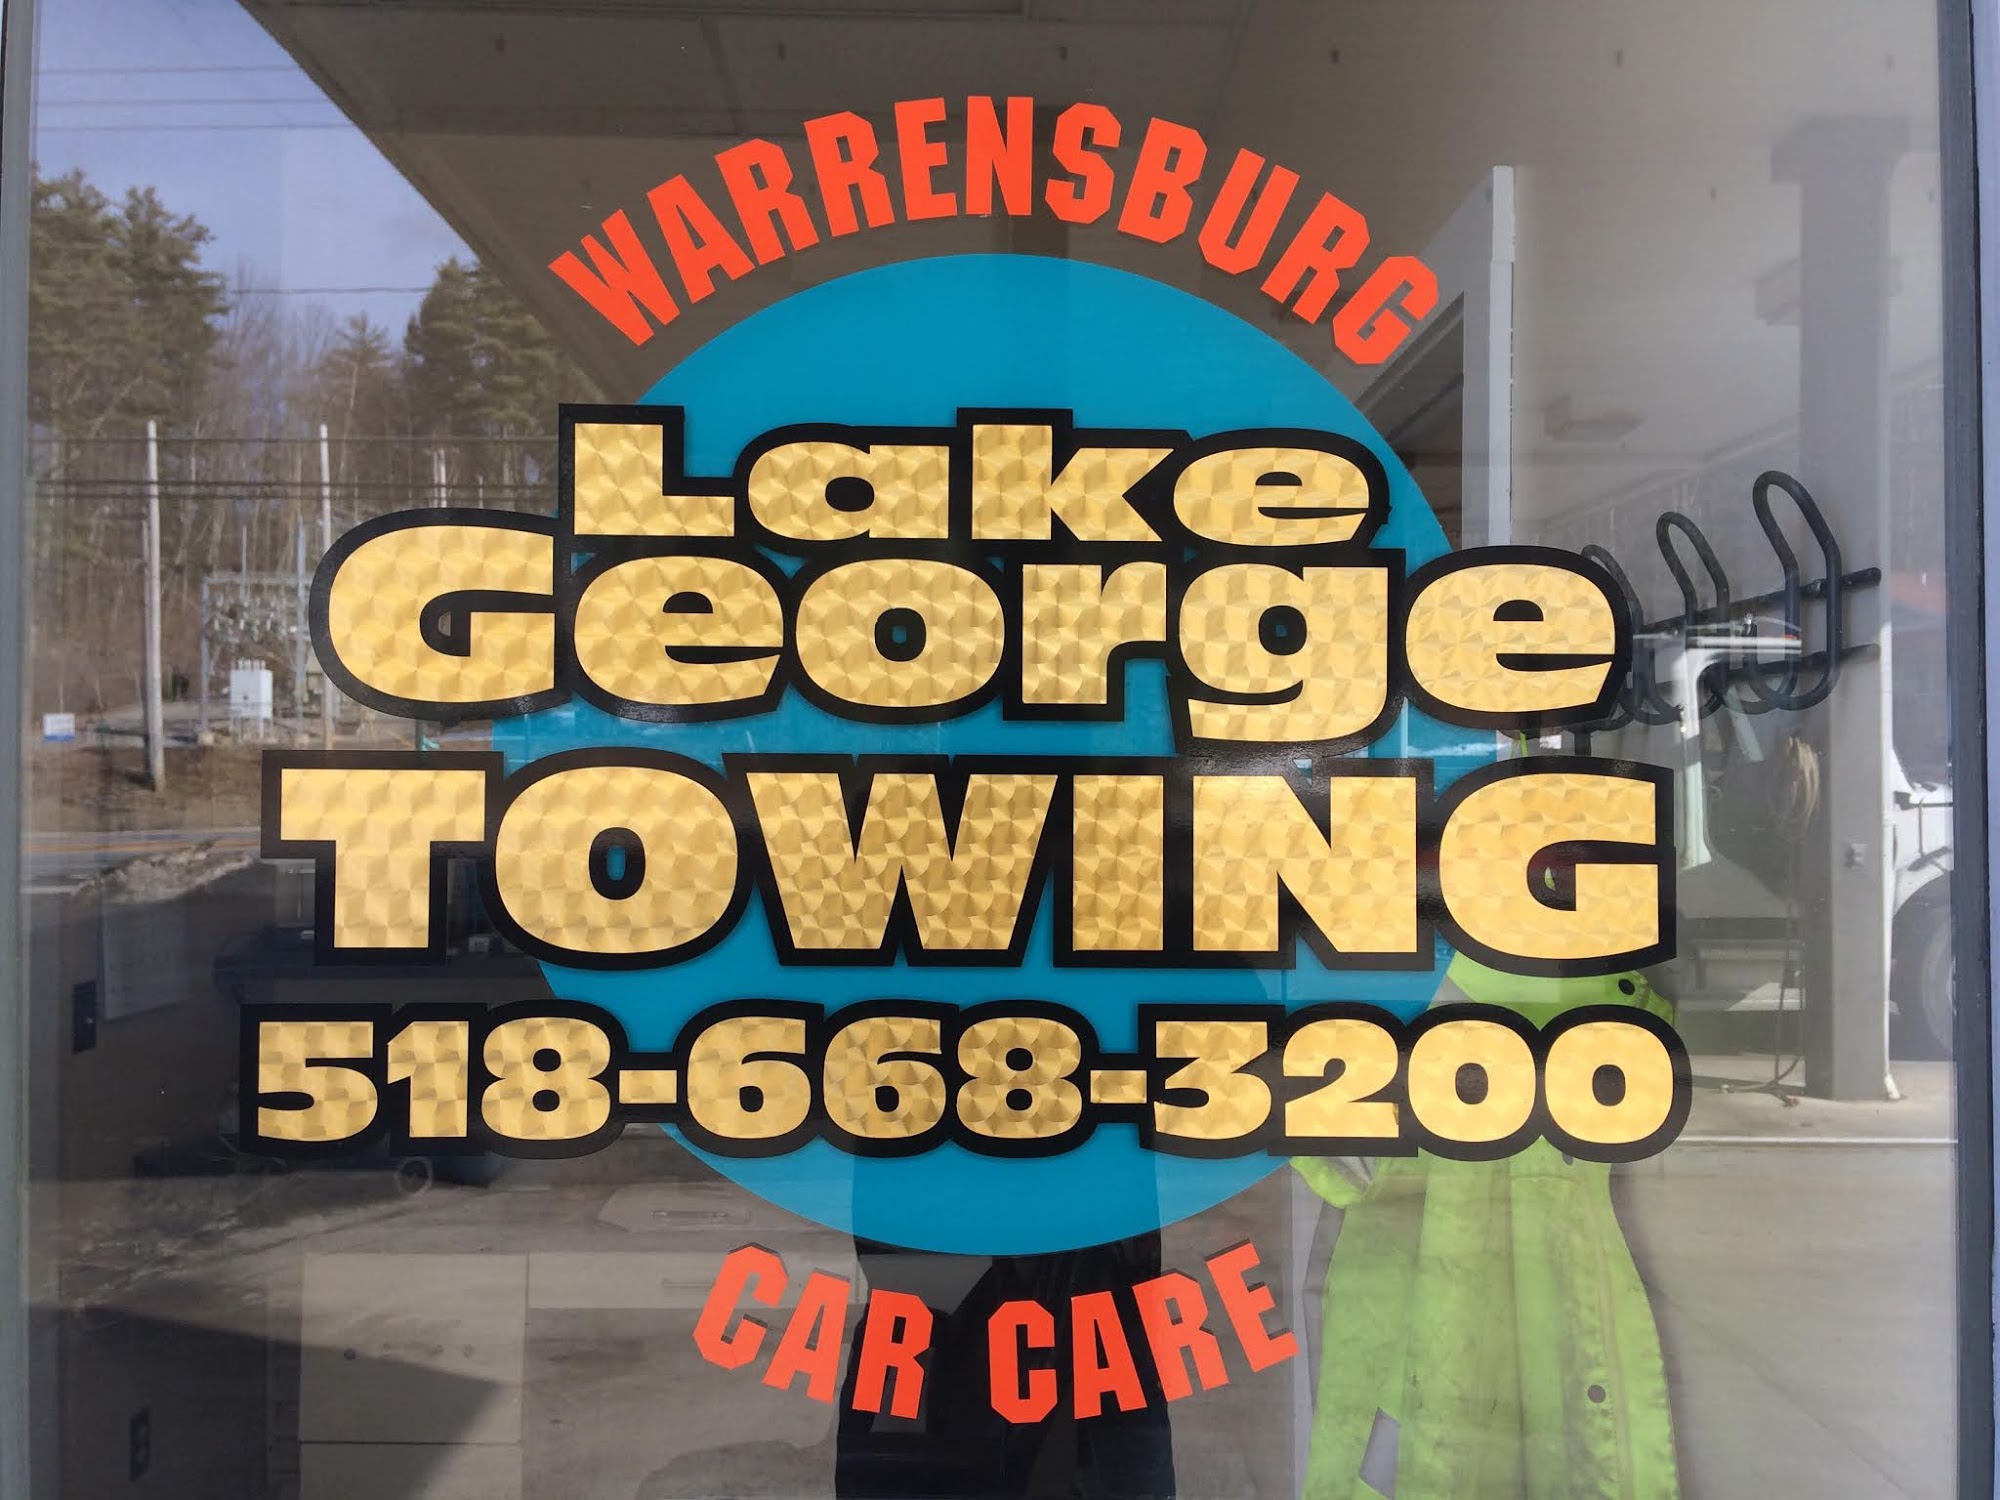 Warrensburg Car Care LLC